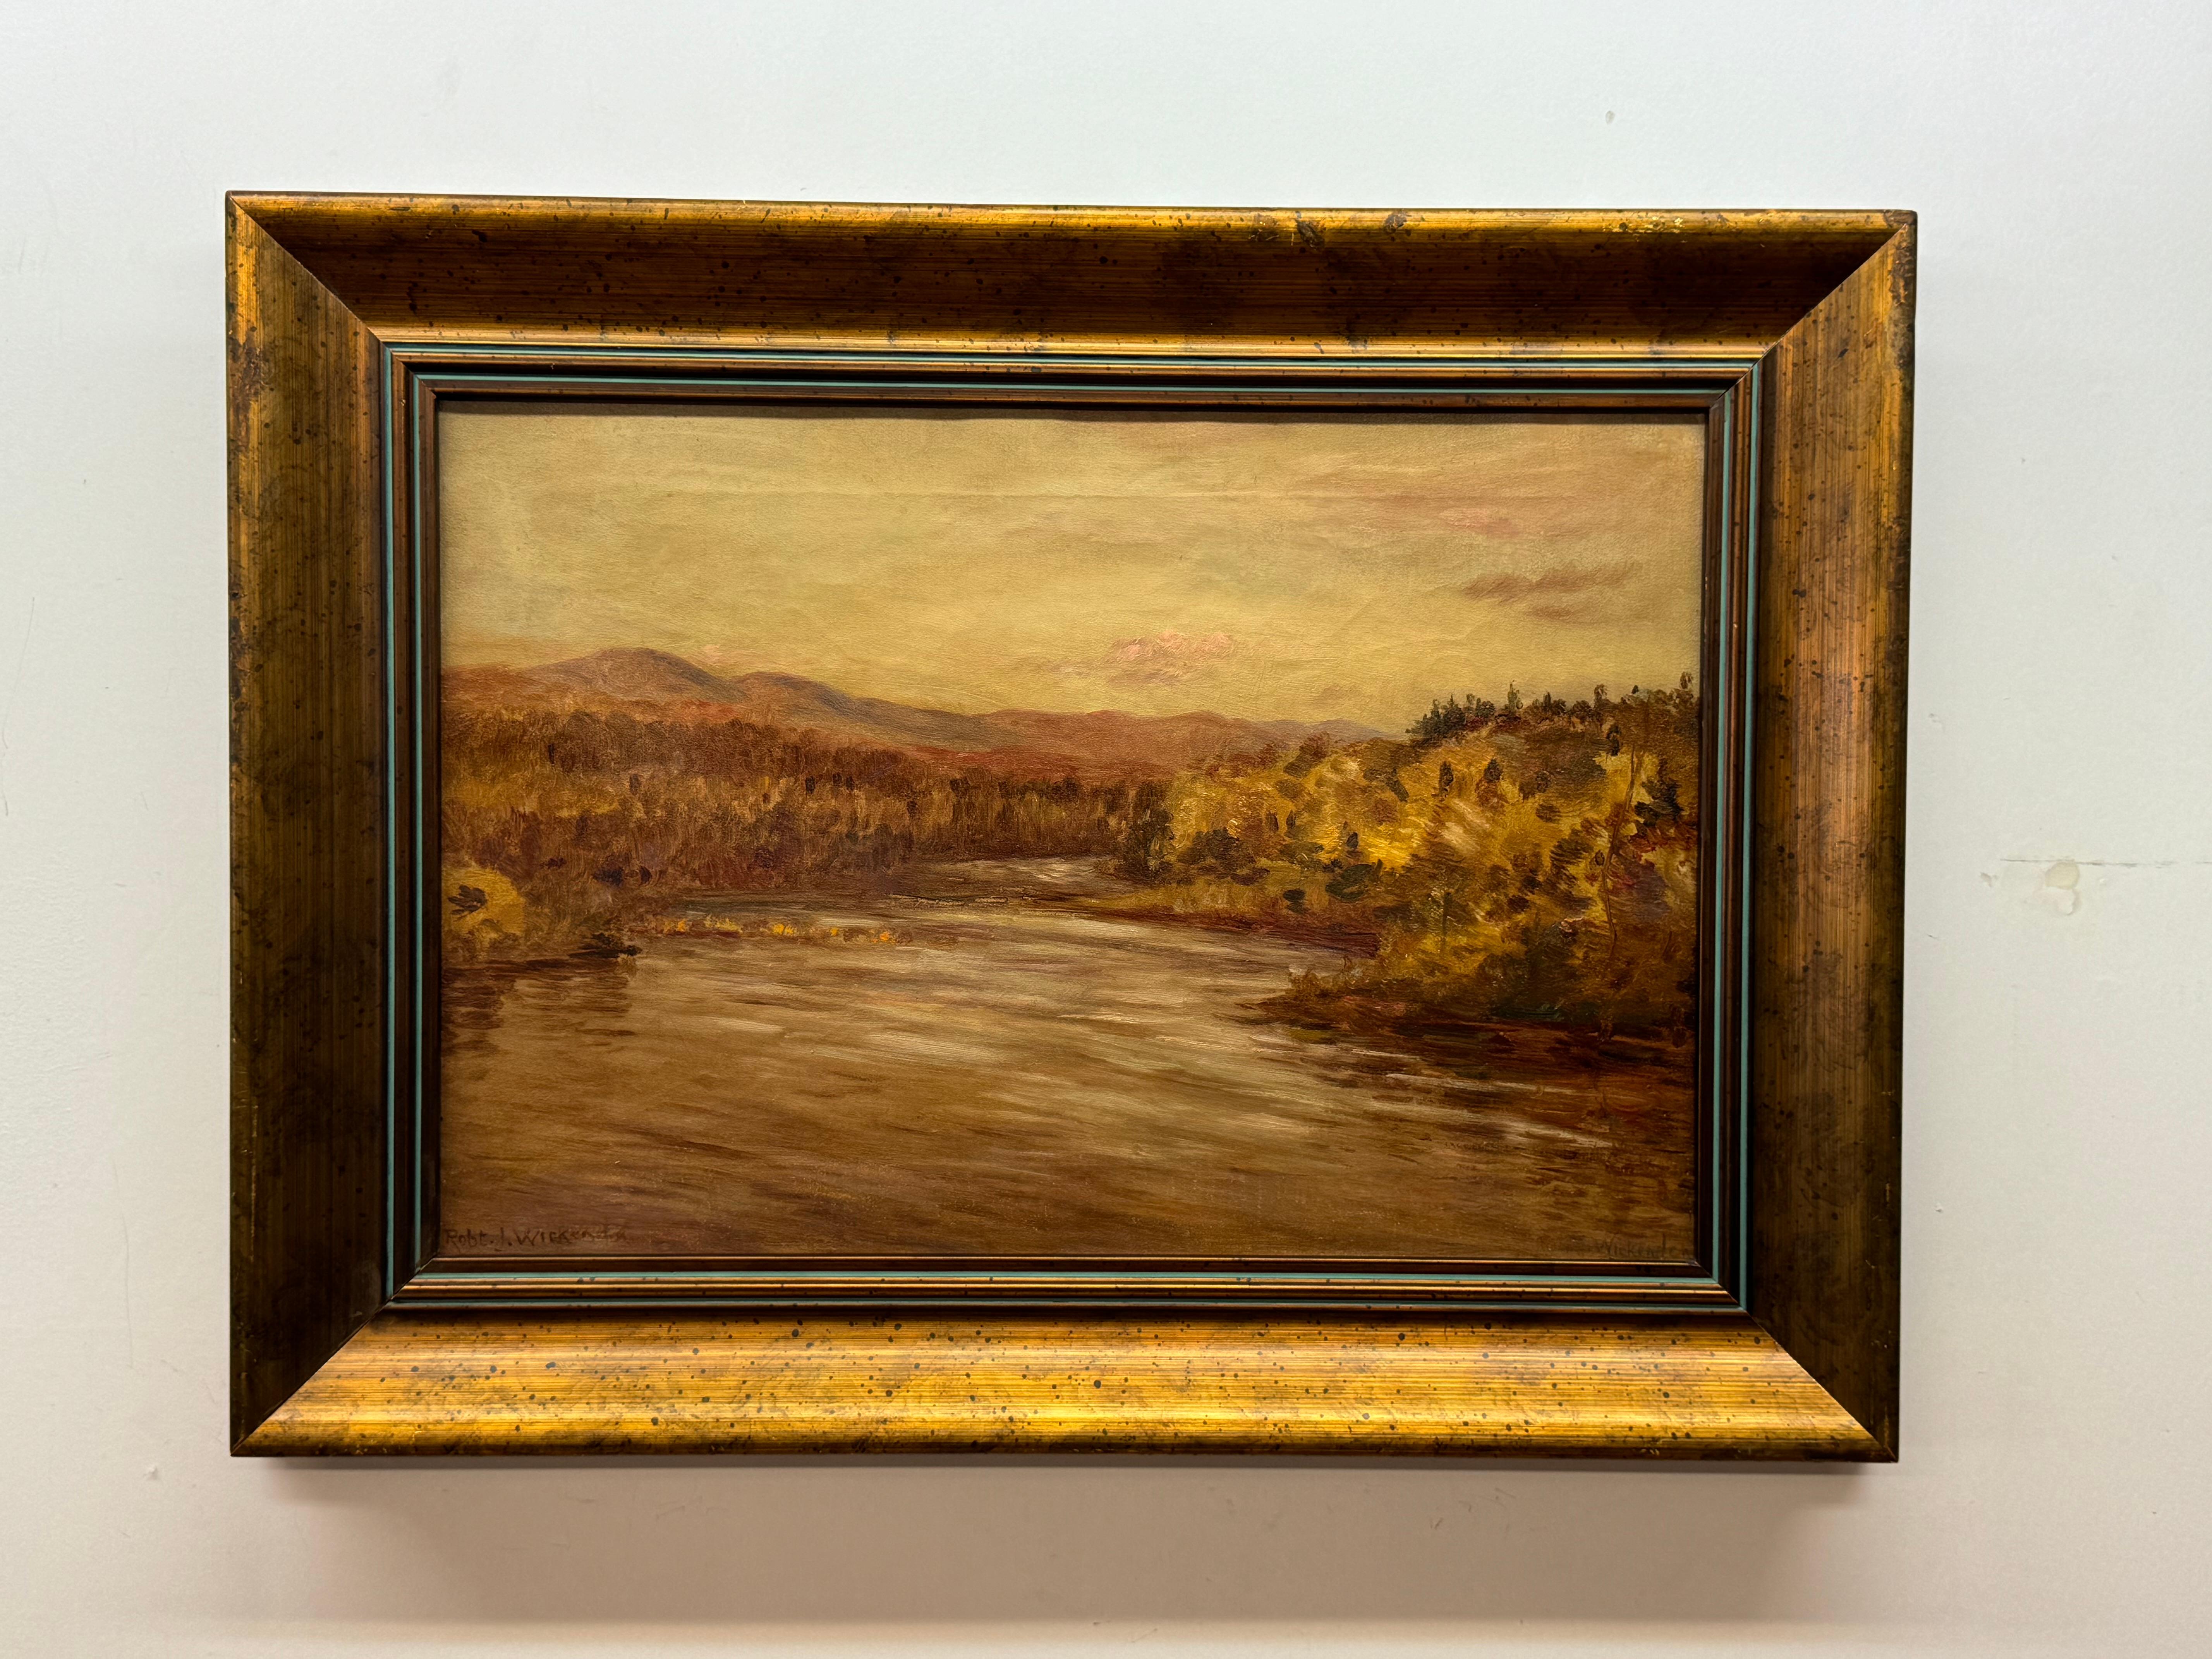 Robert J Wickenden 1861 – 1931 Canadian landscape of marshes.
Oil on canvas
Signed
15 x 22 unframed, 21.25 x 28.25 framed
